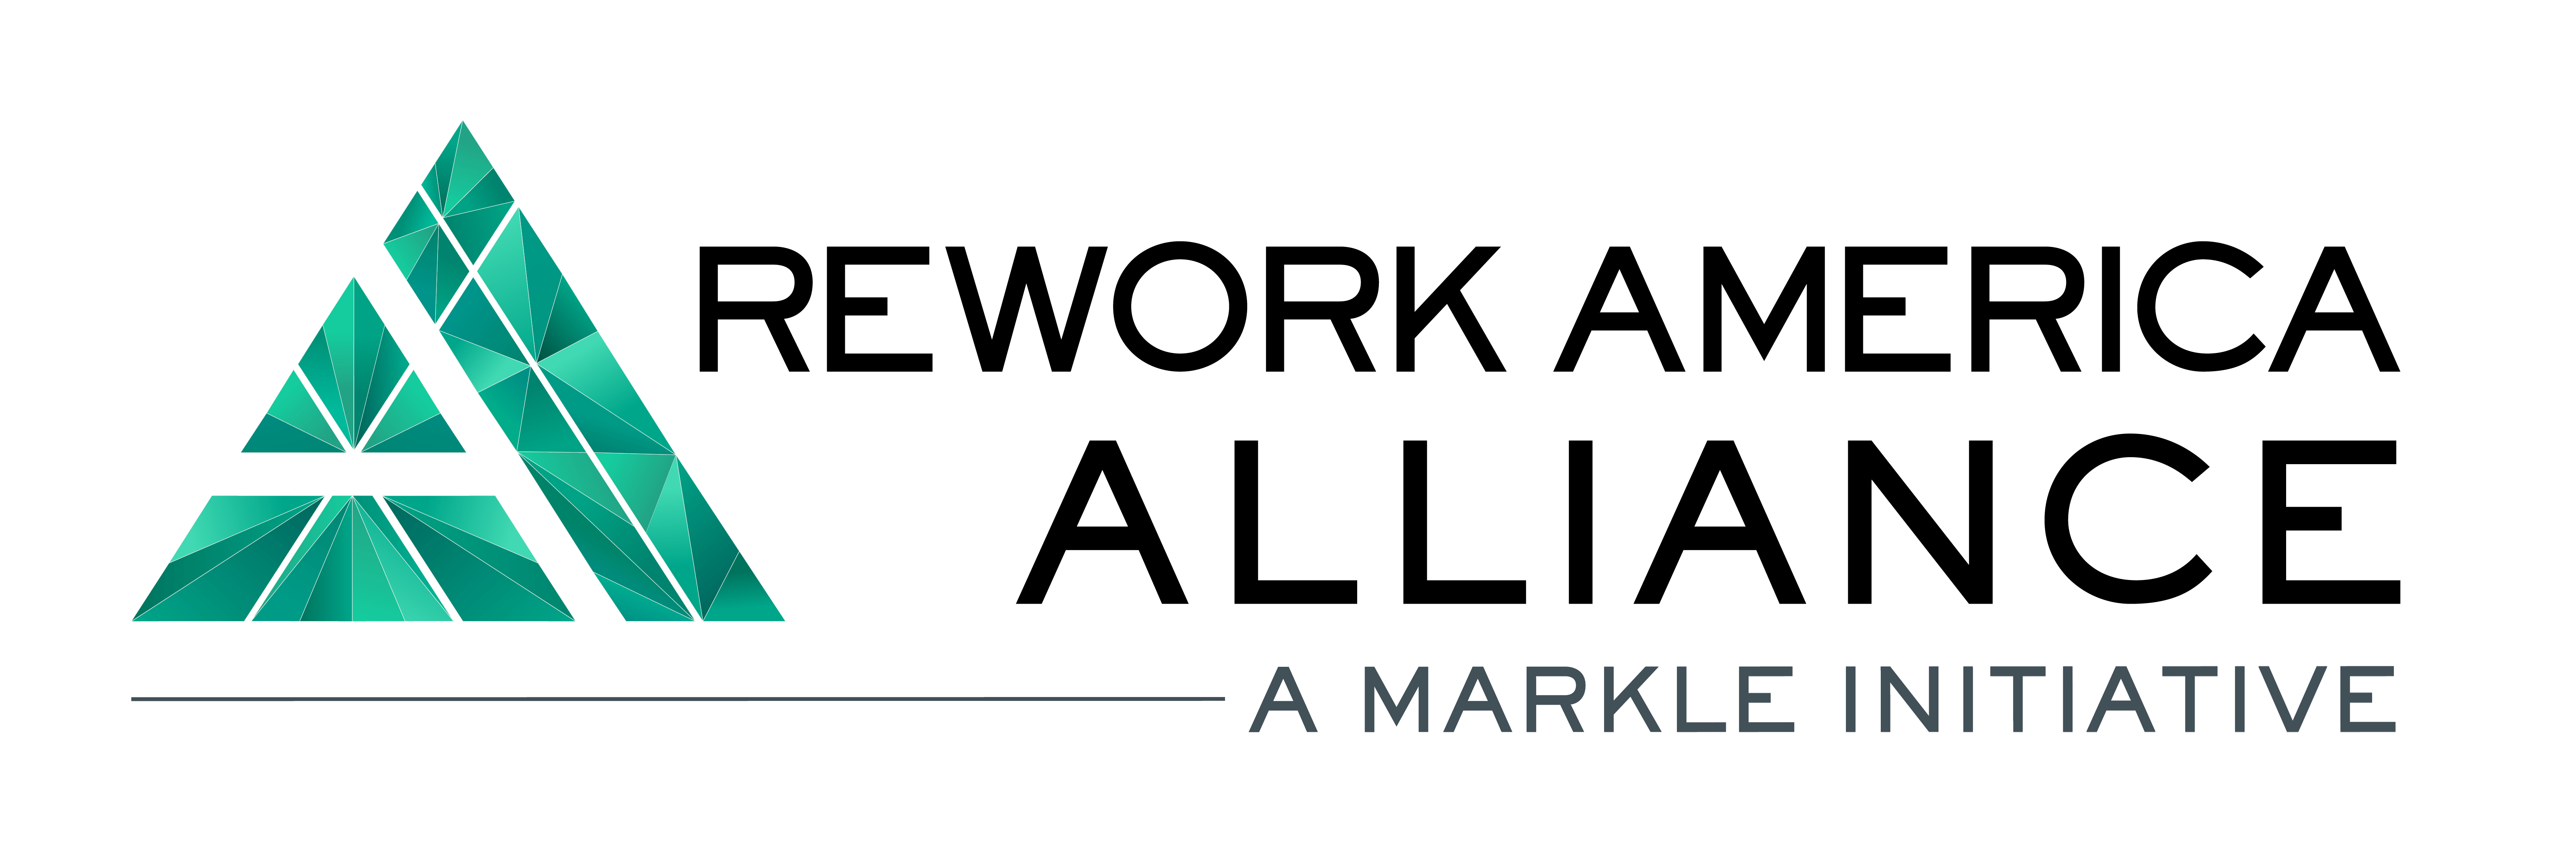 Rework America Alliance logo